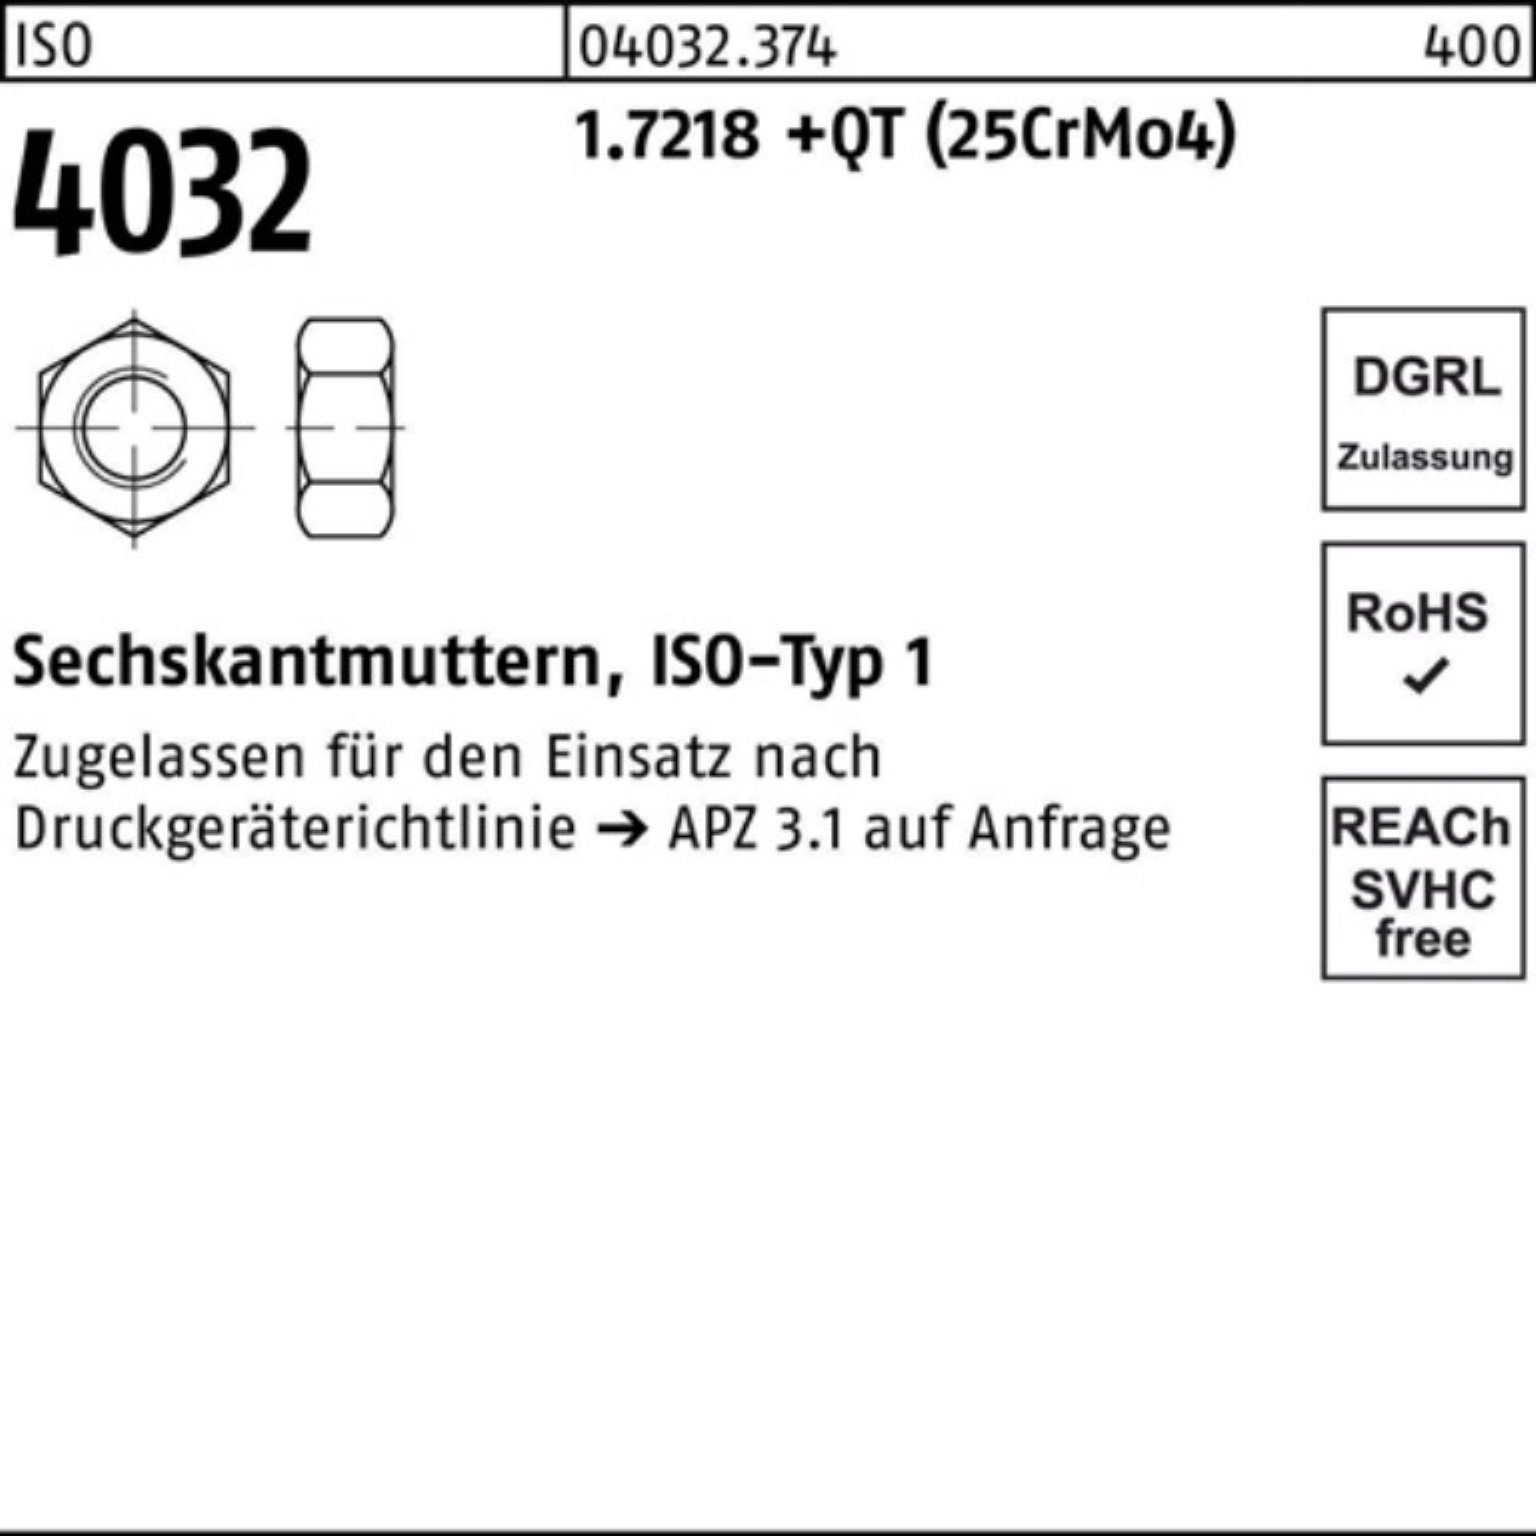 Bufab Muttern Stück ISO 25 (25CrMo4) Sechskantmutter 1.7218 100er Pack +QT 4032 M30